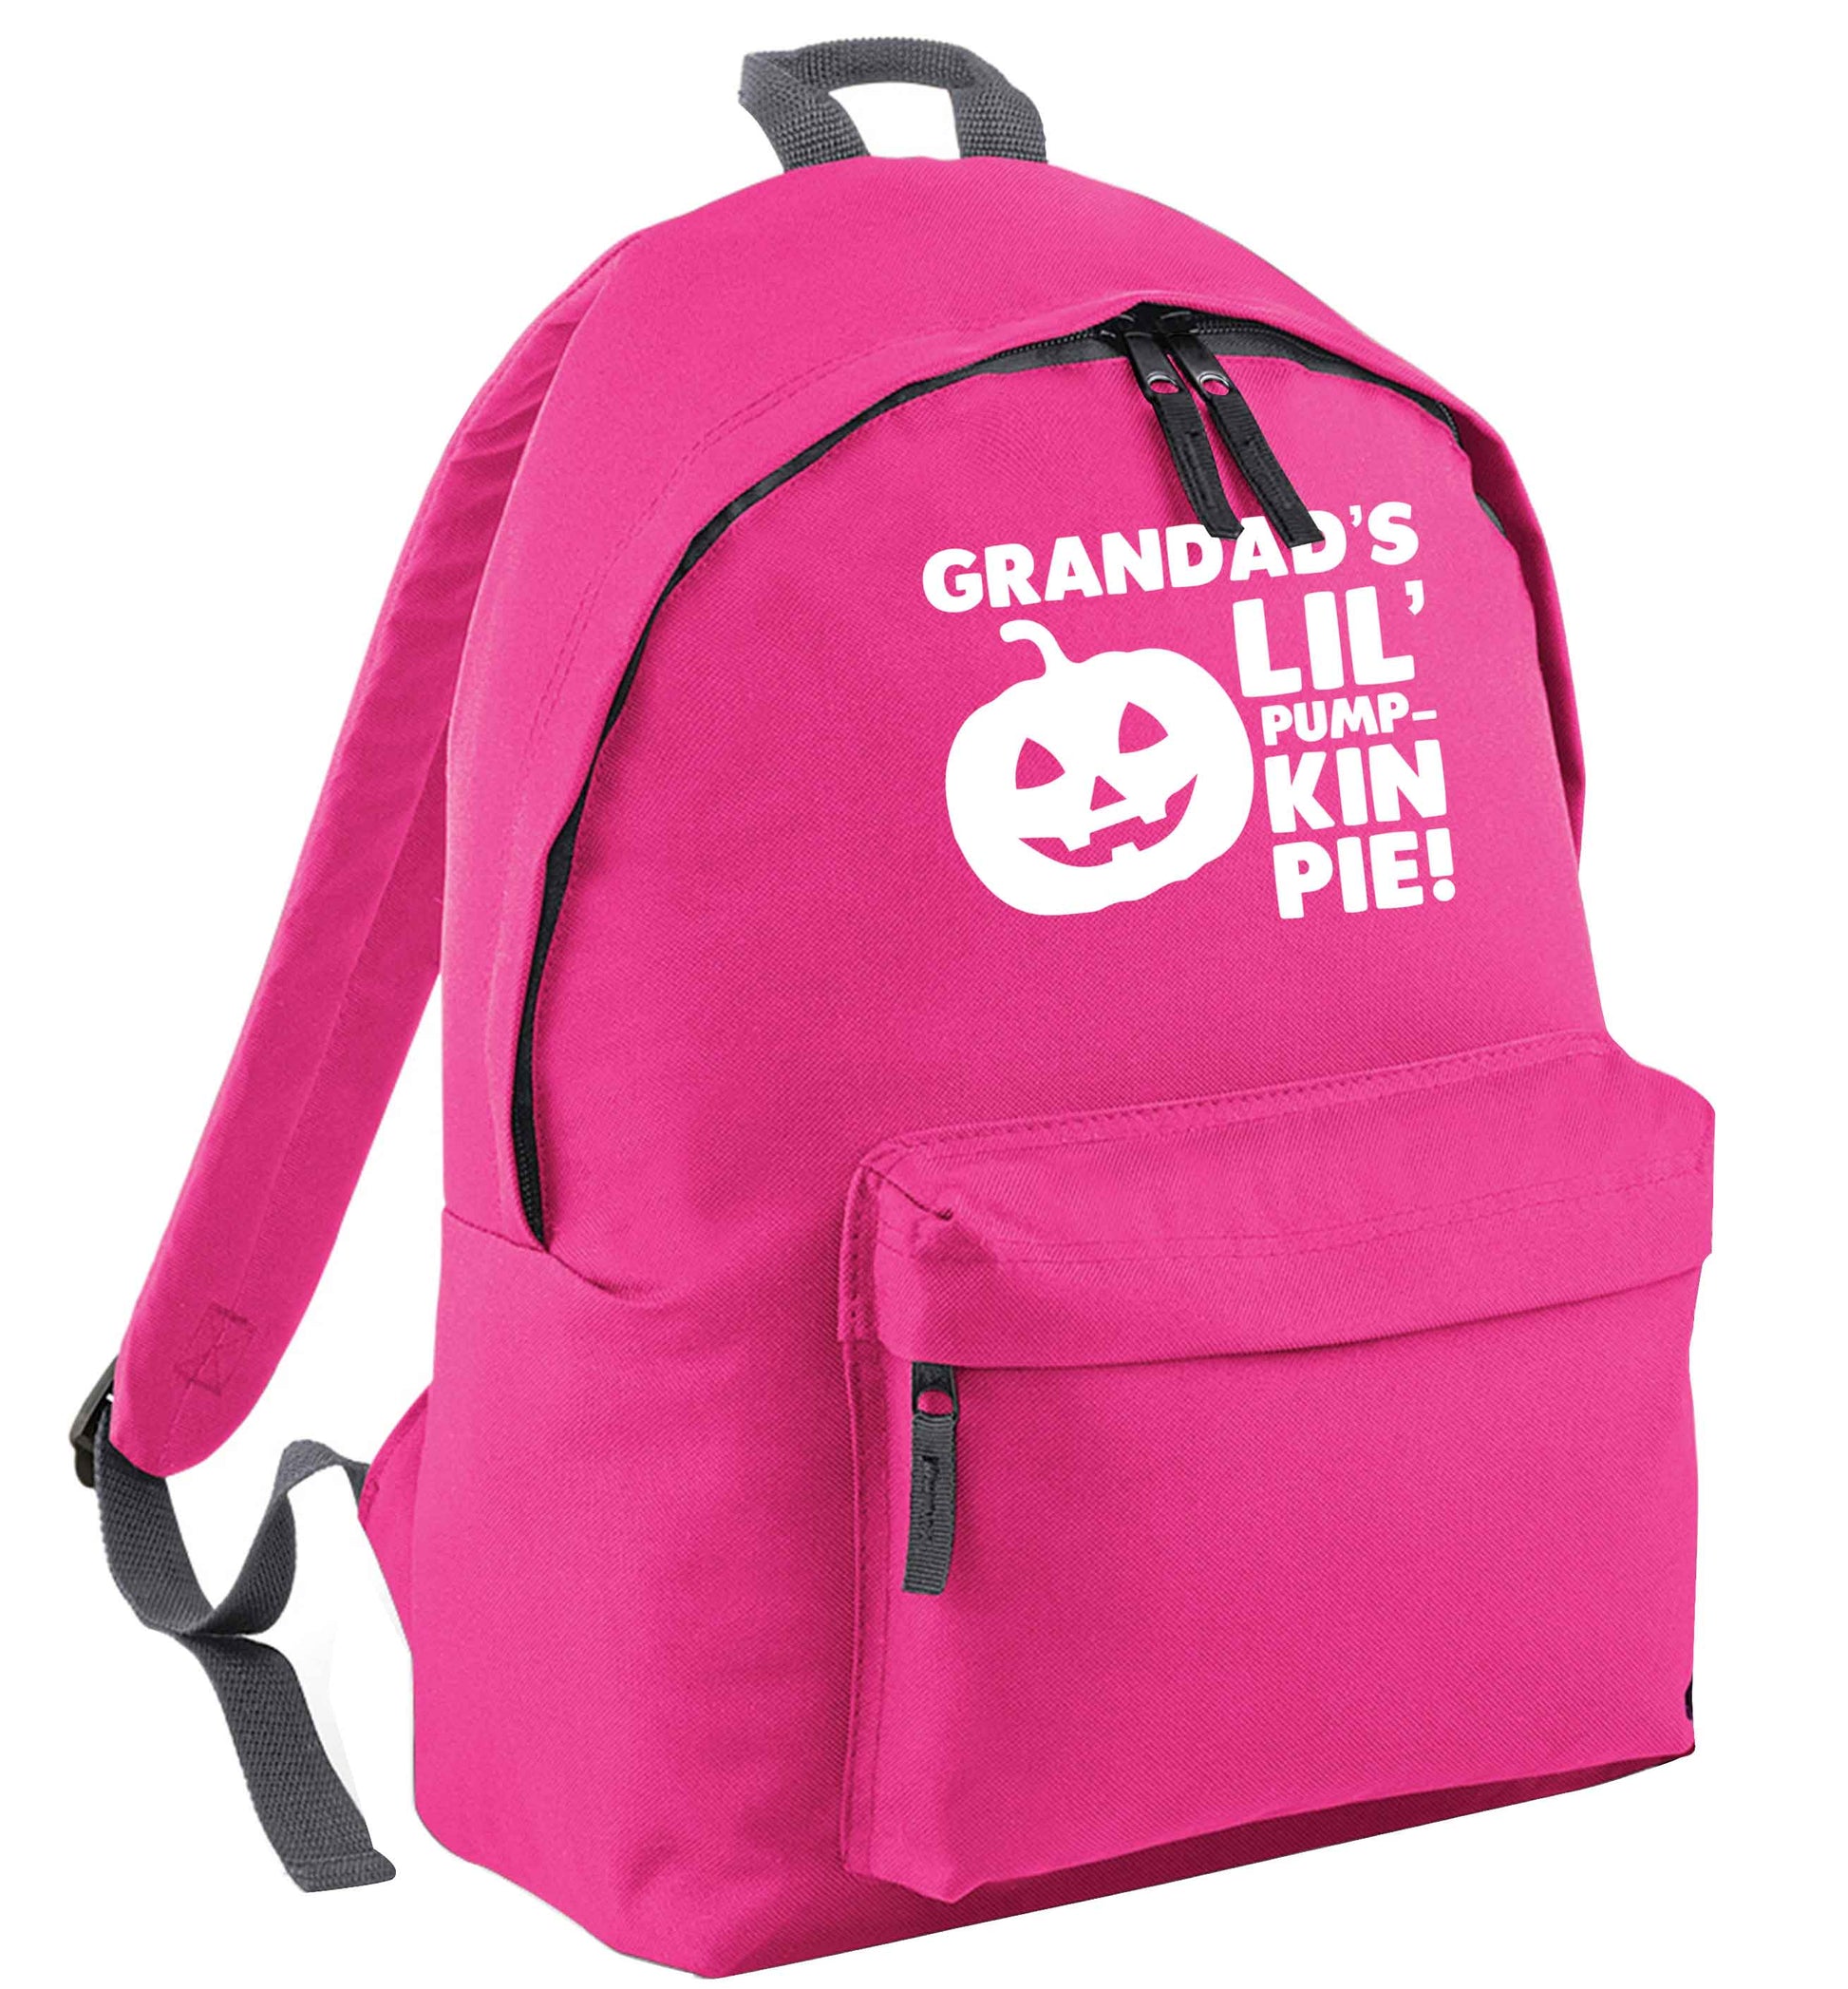 Grandad's lil' pumpkin pie pink adults backpack